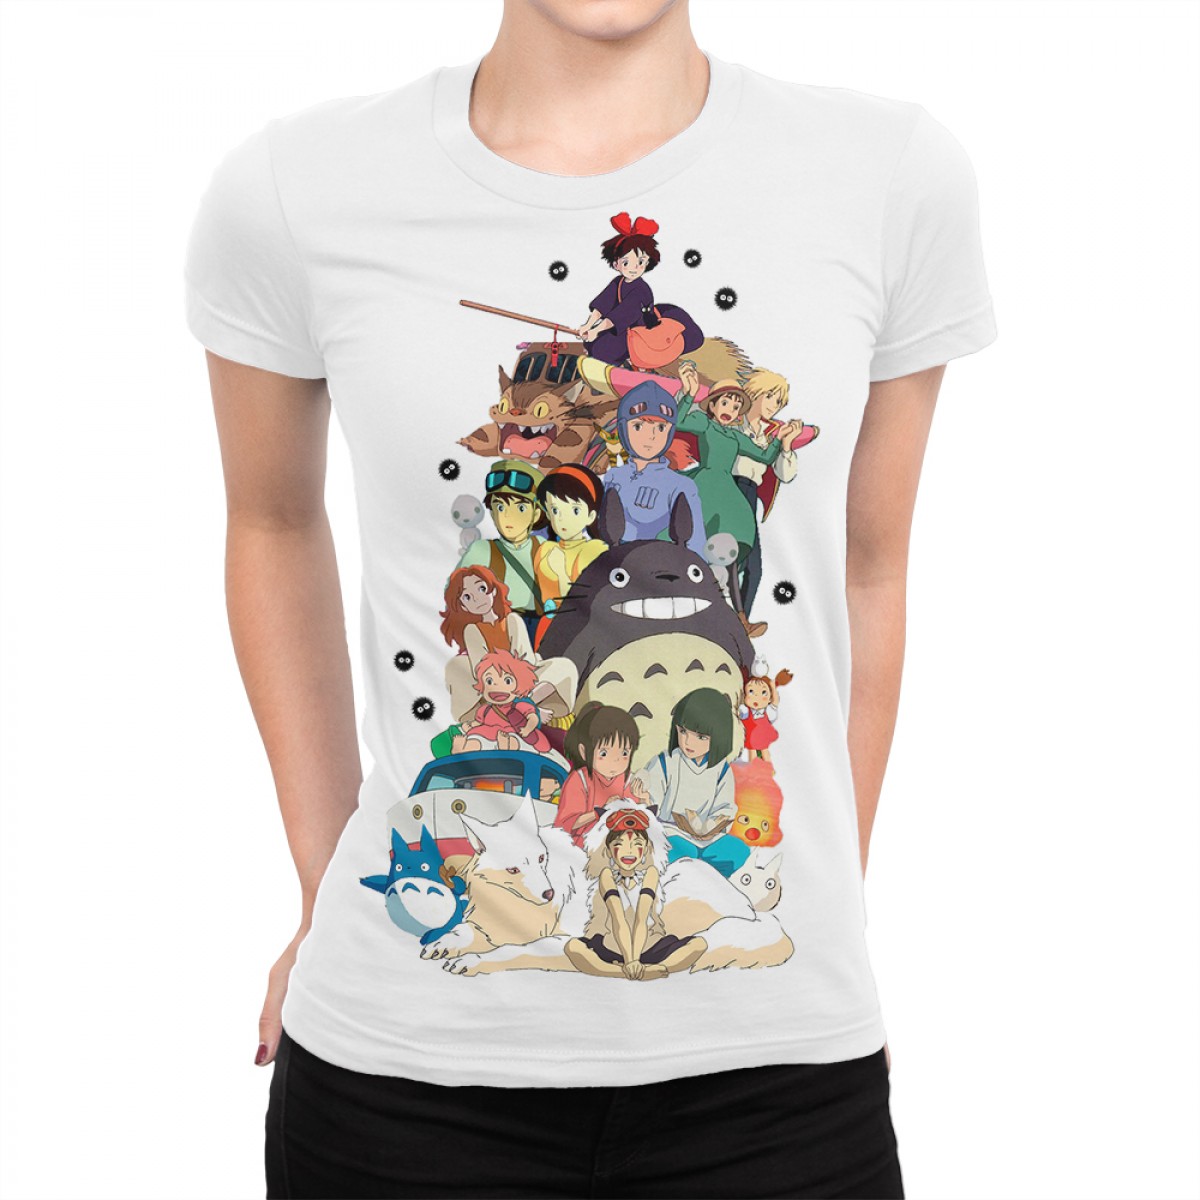 Купить гибли. Футболка Dream Shirts Totoro. Loewe Studio Ghibli футболка. Loewe Studio Ghibli t Shirt. Loewe Studio Ghibli t Shirt новая коллекция.